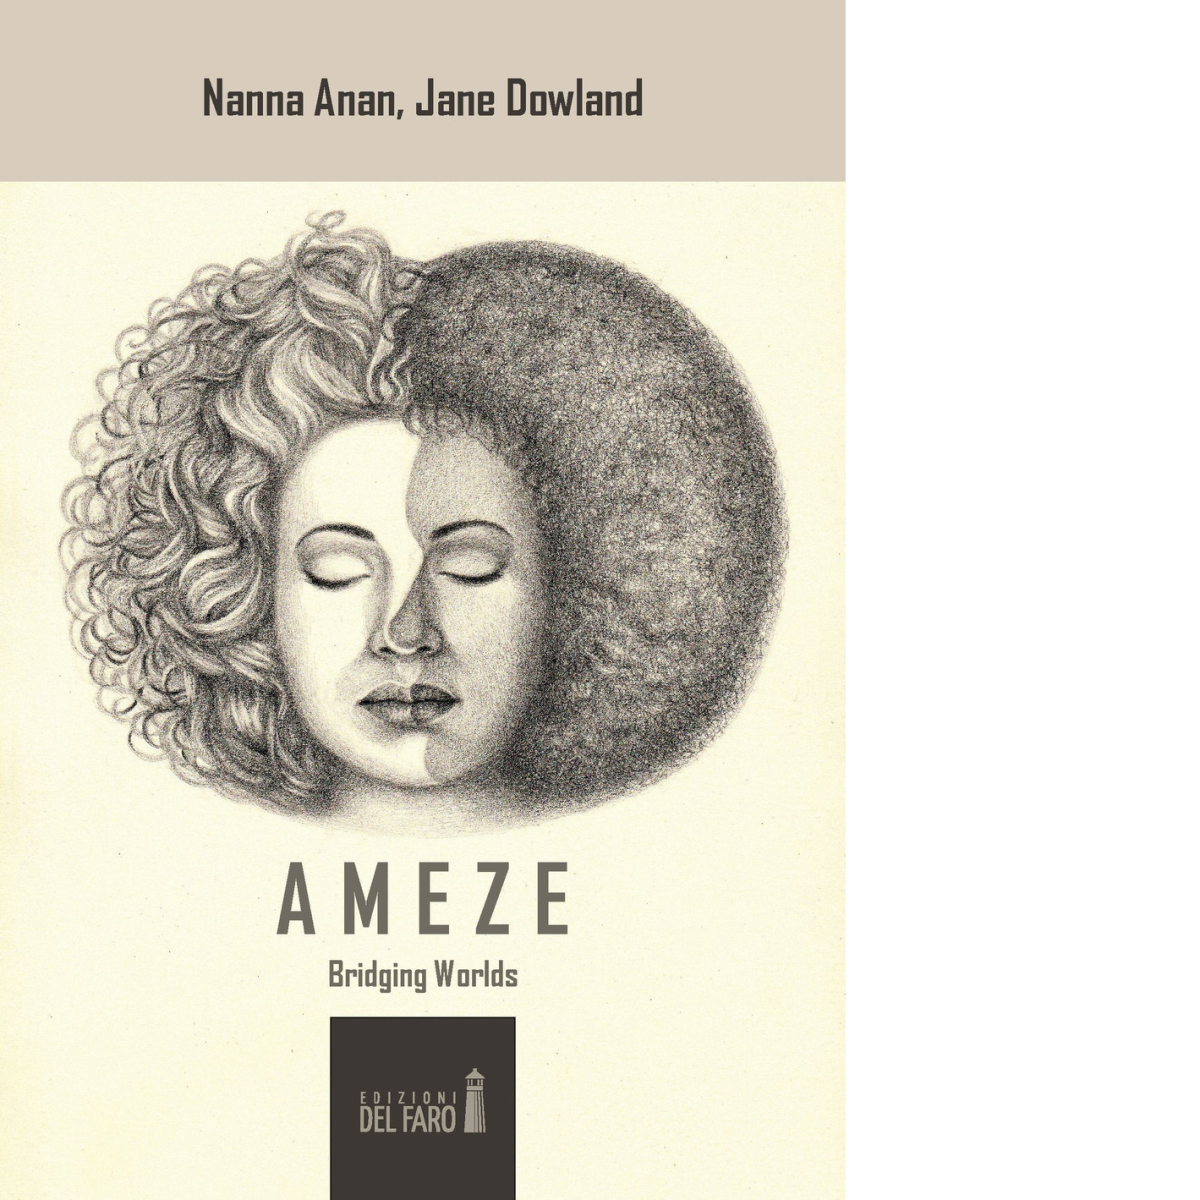 Ameze. Bridging worlds di Anan Nanna; Dowland Jane - Del Faro, 2017